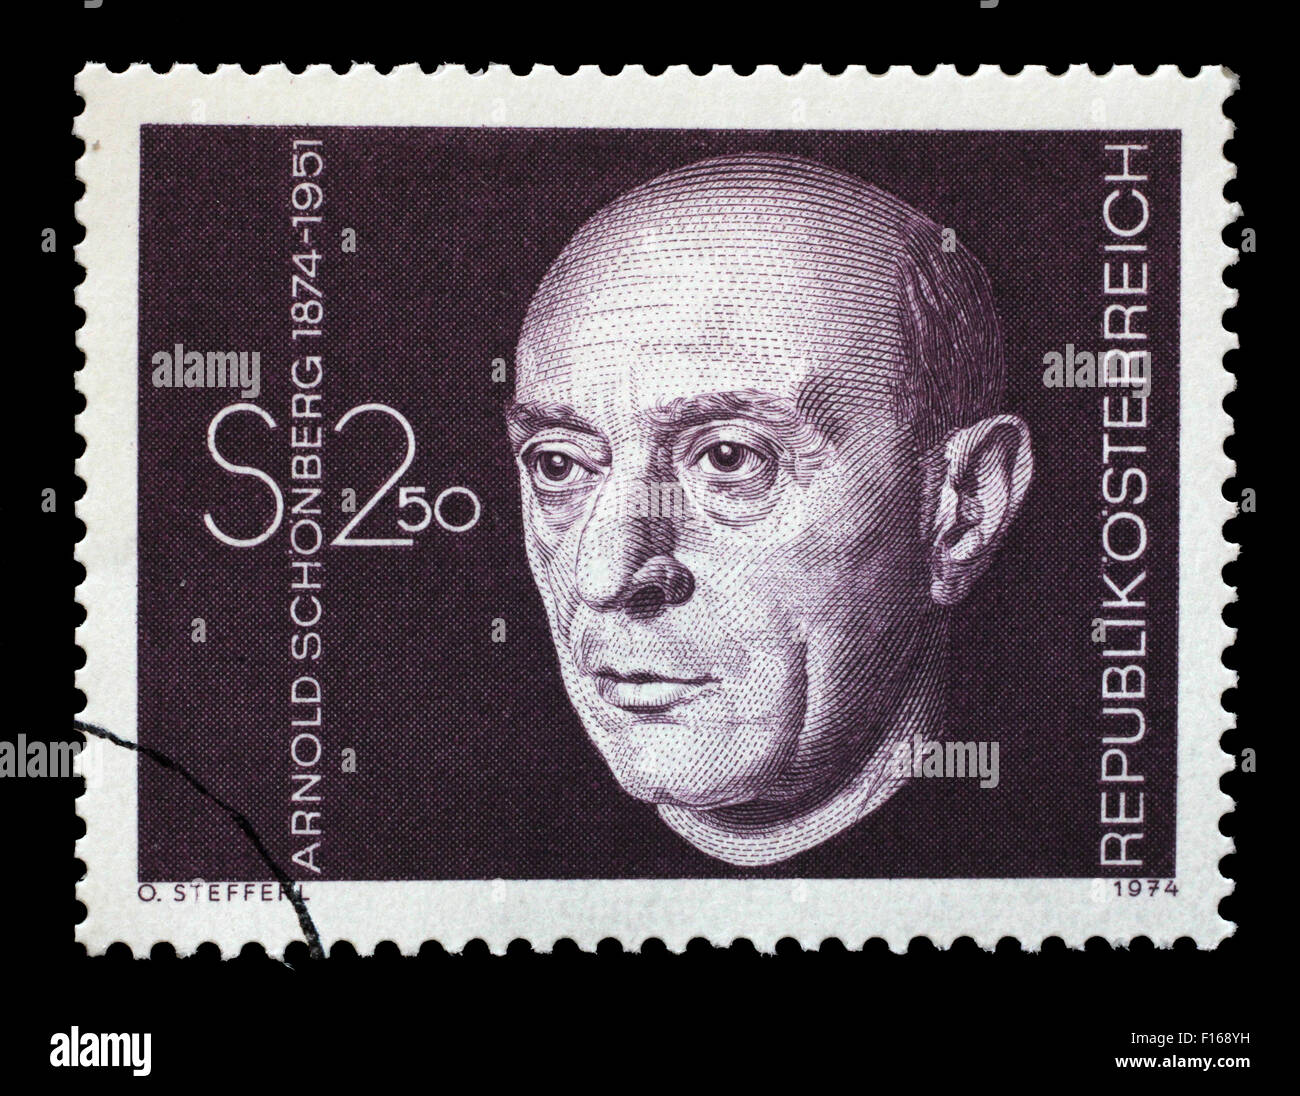 Stamp printed in Austria shows Arnold Schonberg, composer, circa 1974 Stock Photo